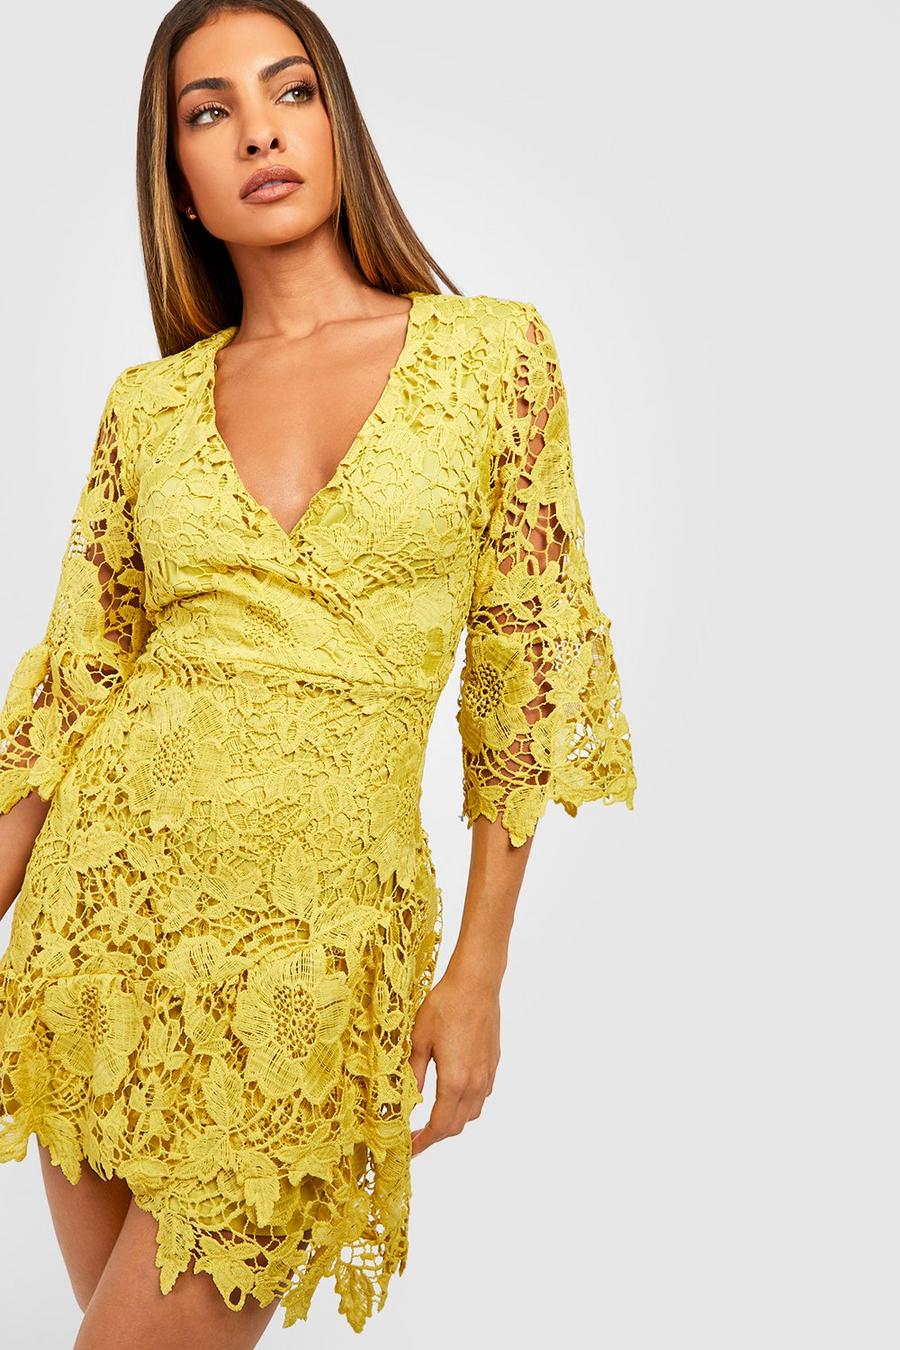 Chartreuse yellow Crochet Lace Wrap Dress